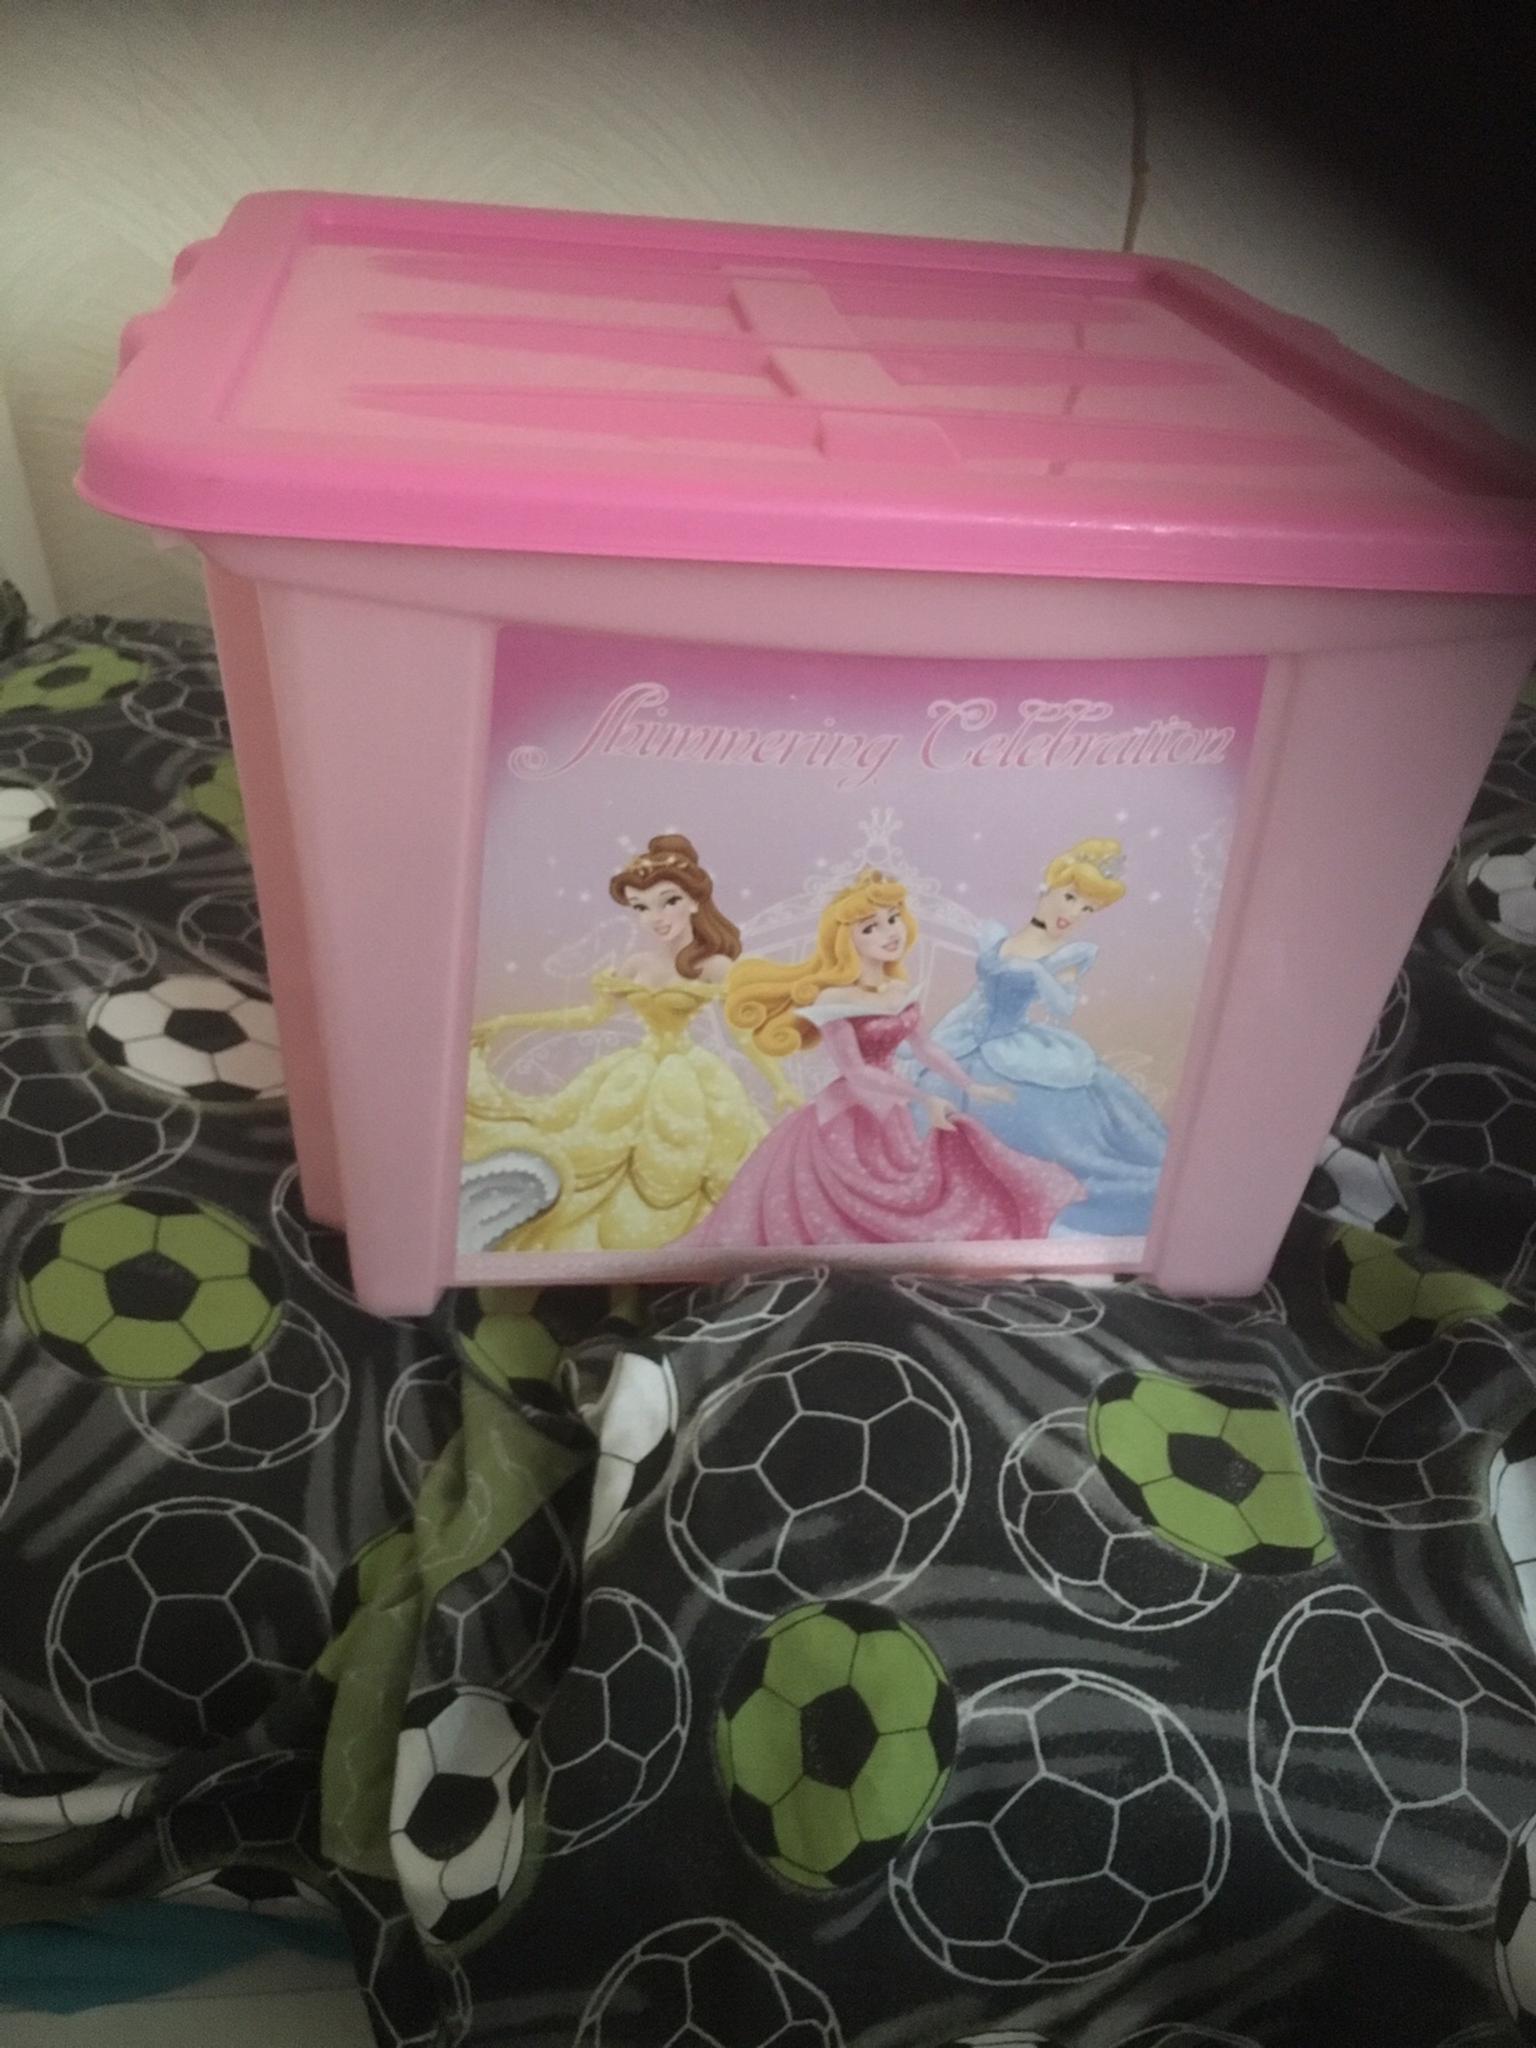 princess storage chest